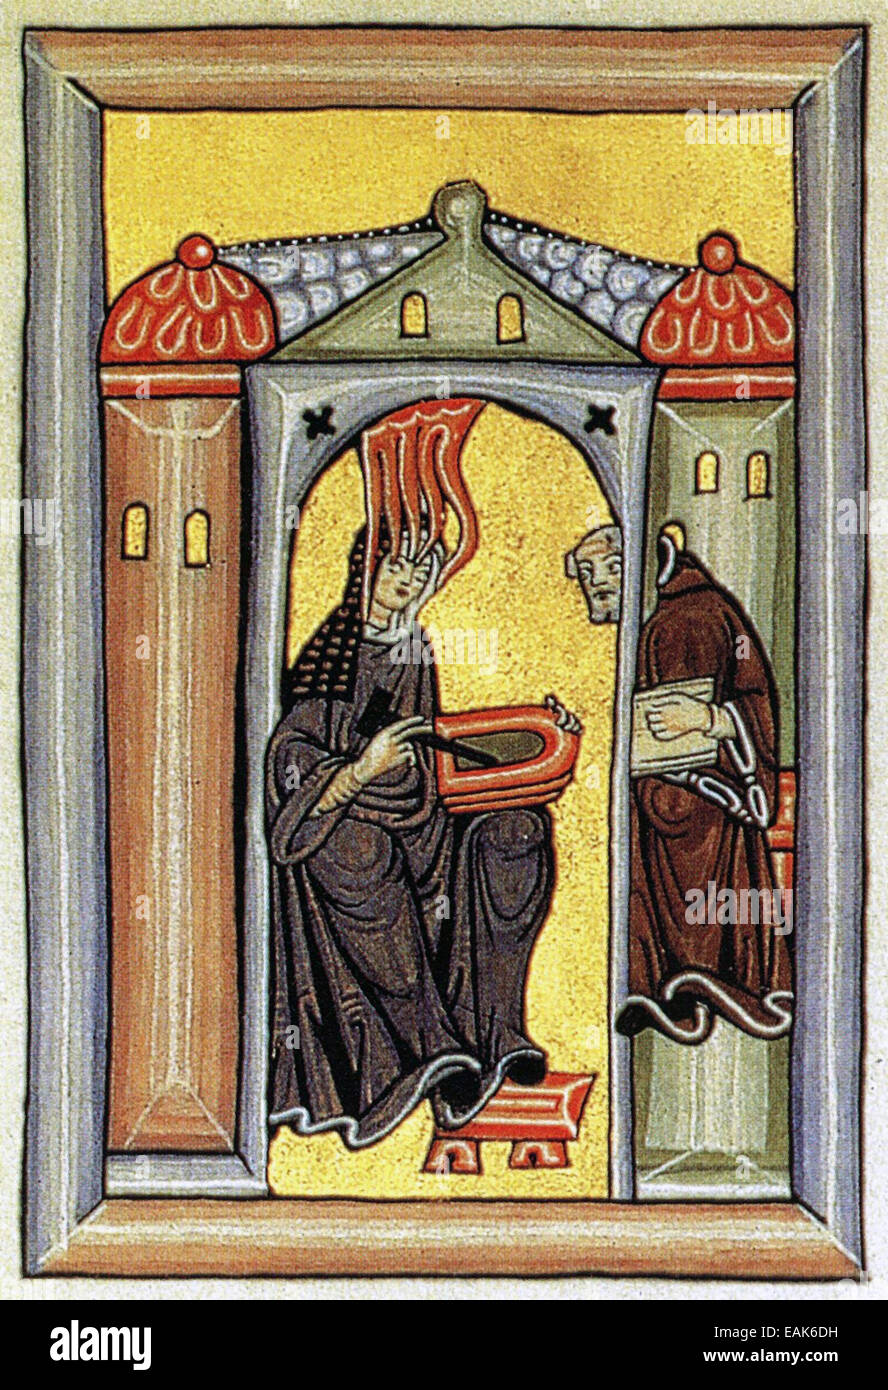 SAINT HILDEGARD OF BINGEN (1098-1179) German mystic and polymath shown in the Liber Scivias Stock Photo